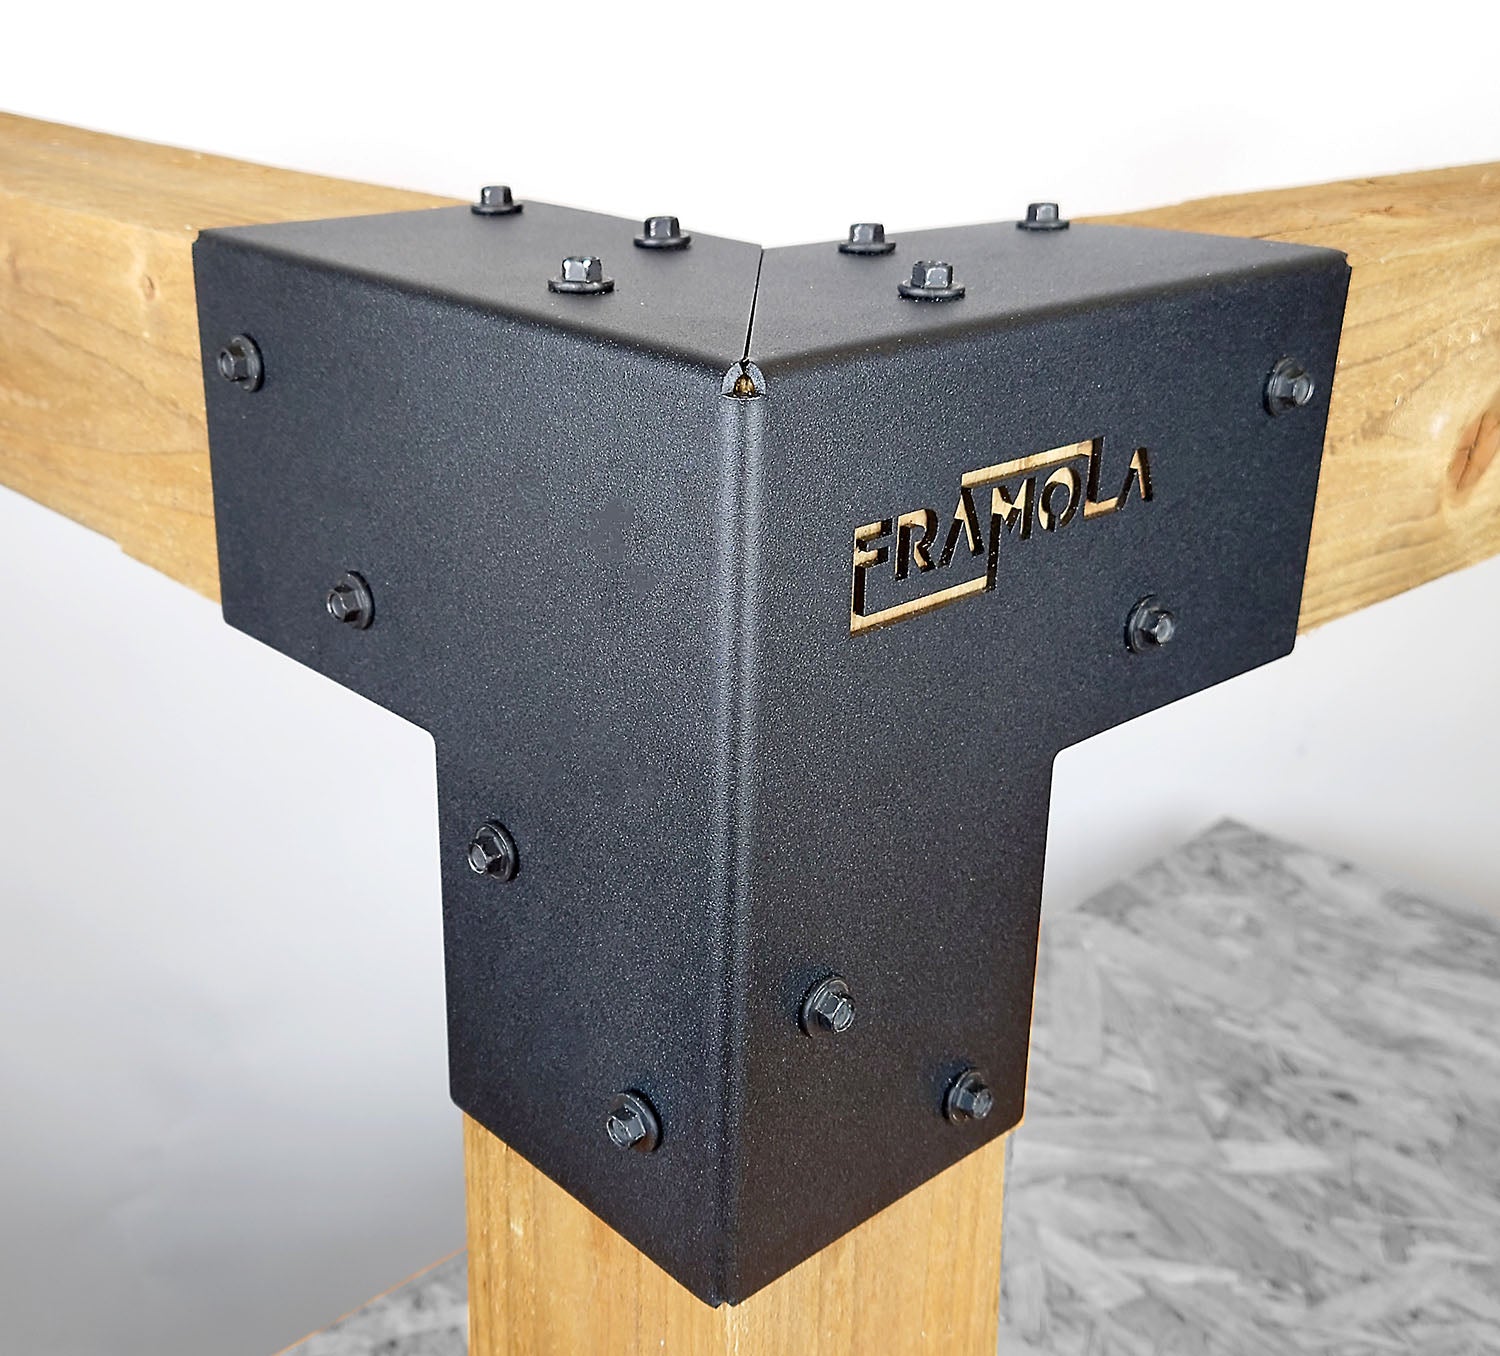 Framola Official Black Timber Pergola Installation Screws (Pack of 50)